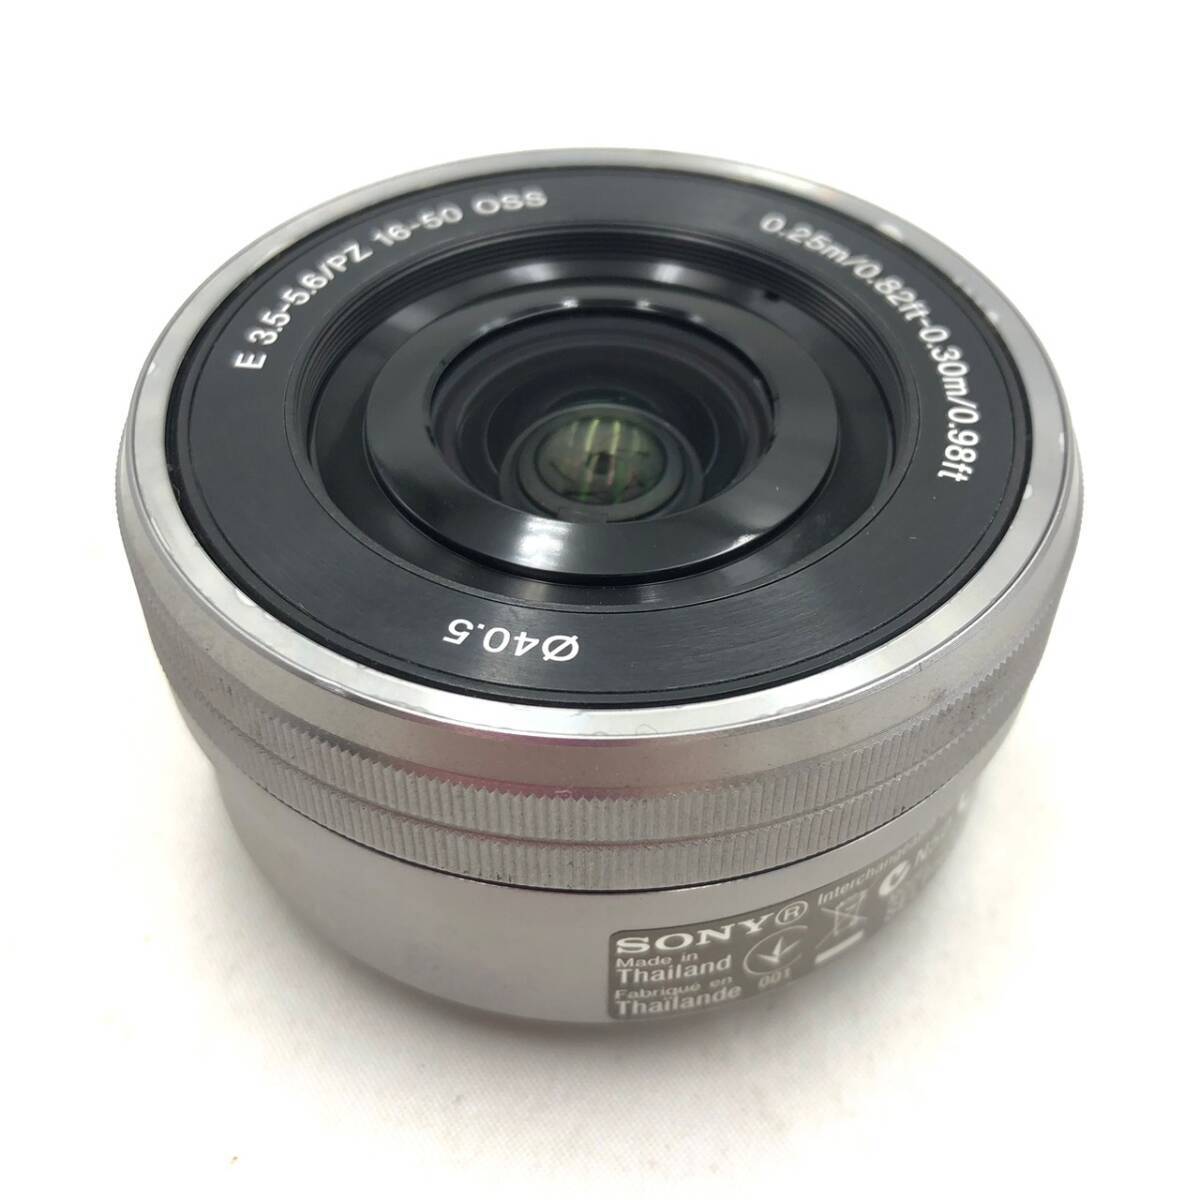 BDm039R 60 SONY SELP1650 α/アルファ Eマウント用 レンズ PZ 16-50mm F3.5-5.6 OSS φ40.5 0.25m/0.82ft-0.30m/0.98ft カメラの画像1